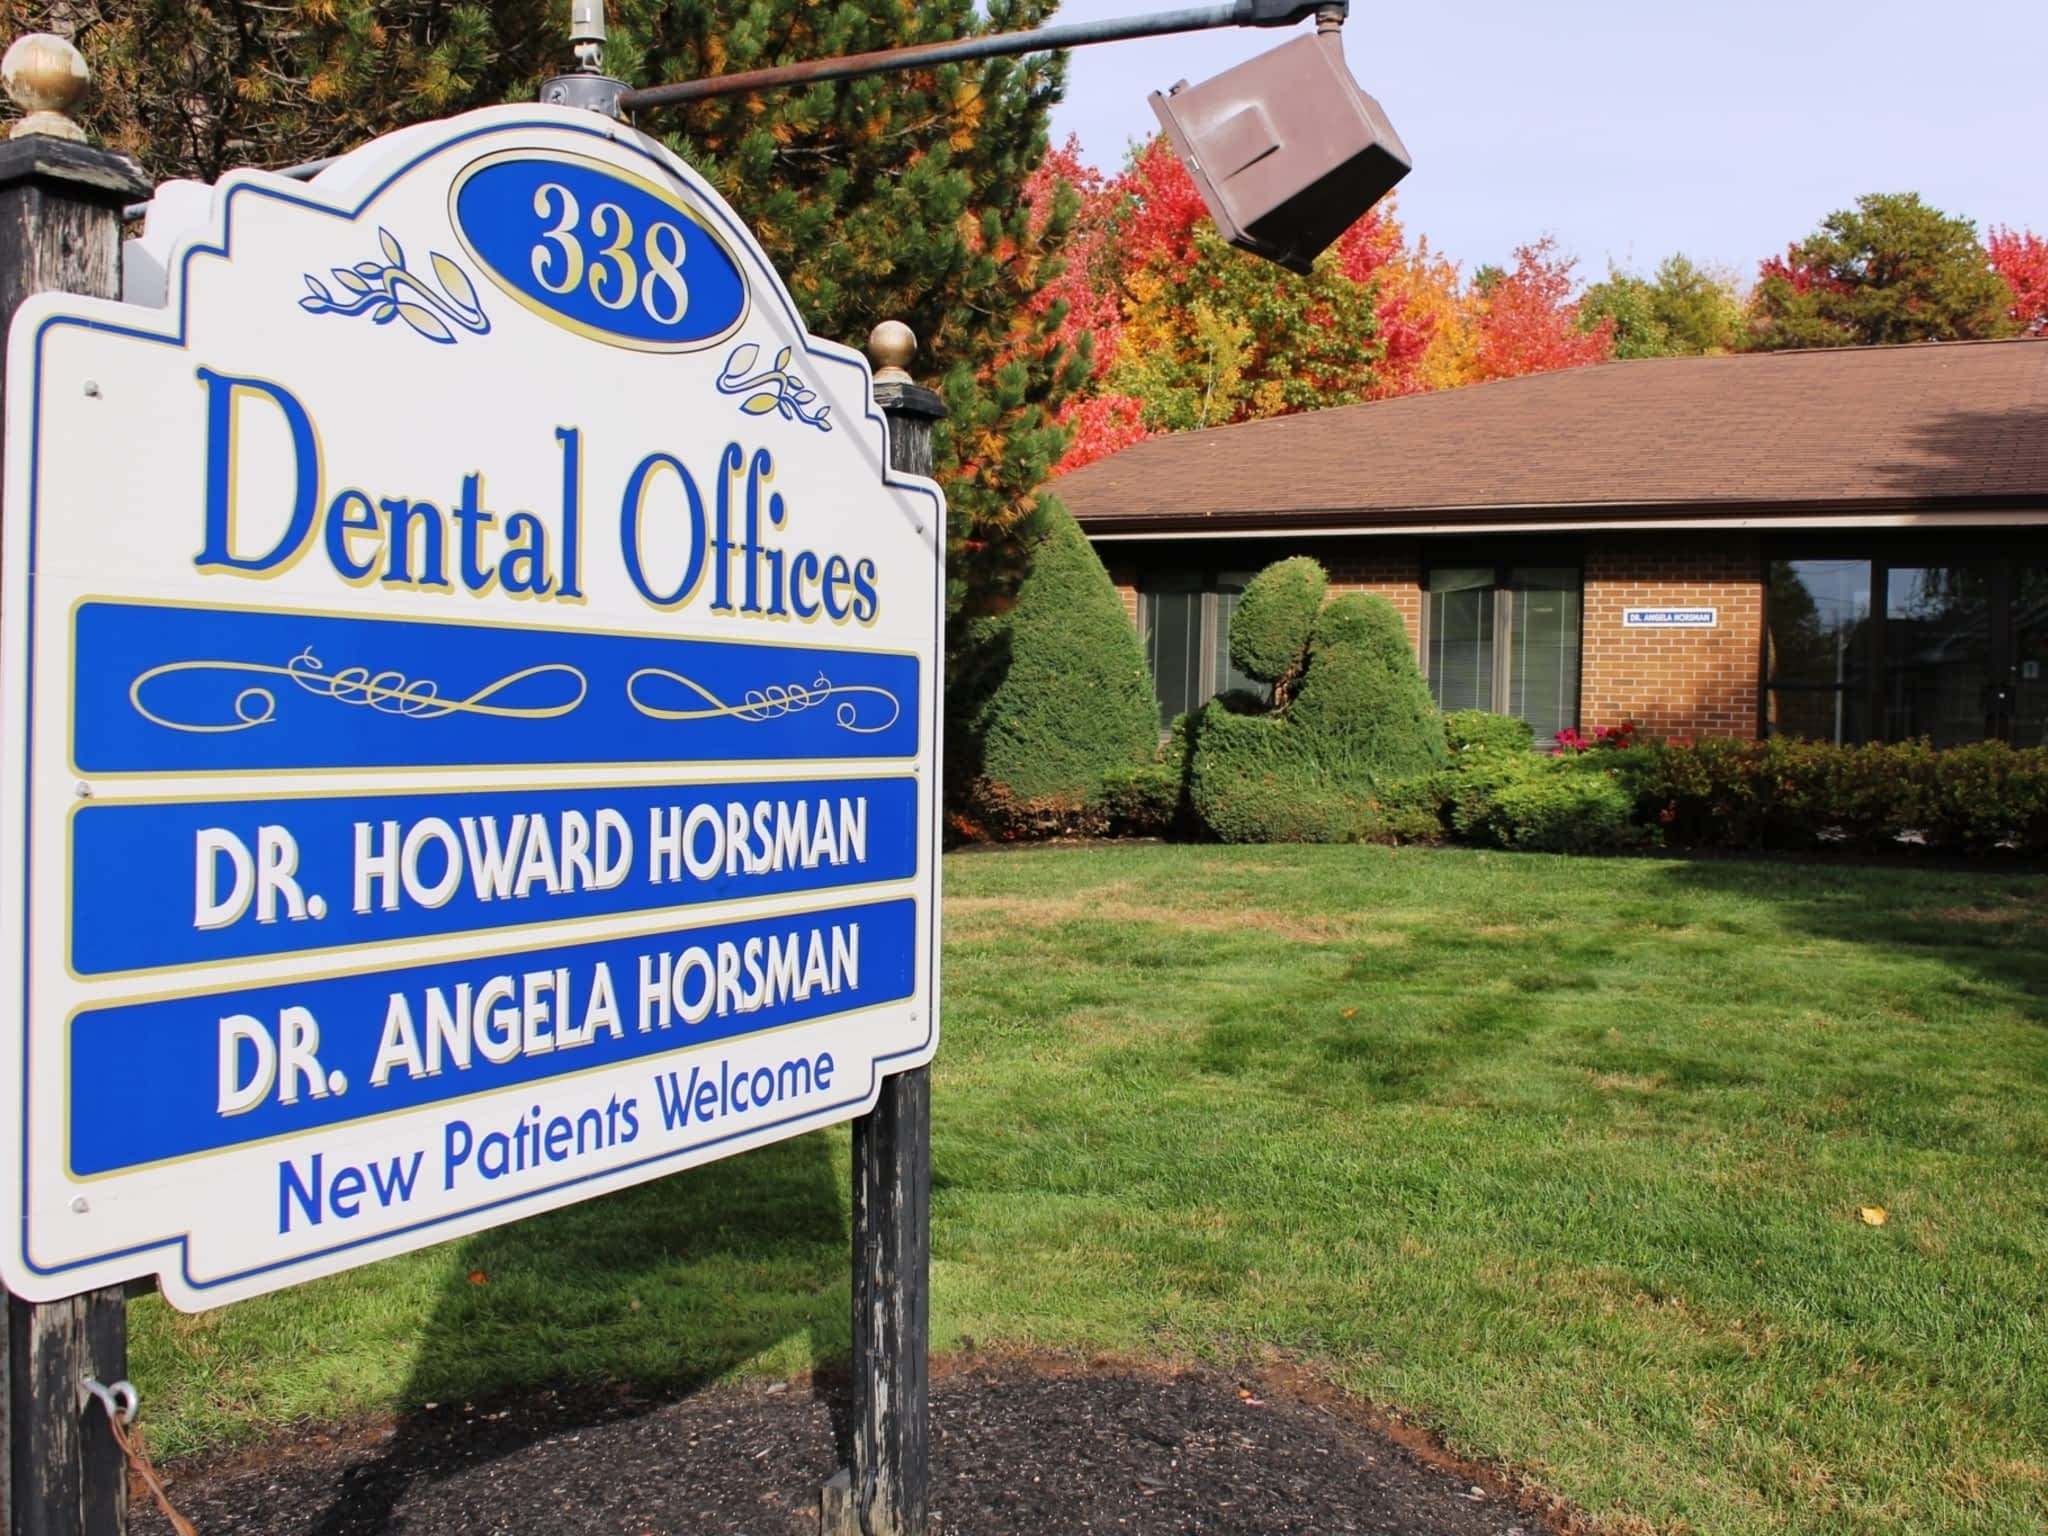 photo Horsman Dental Clinic